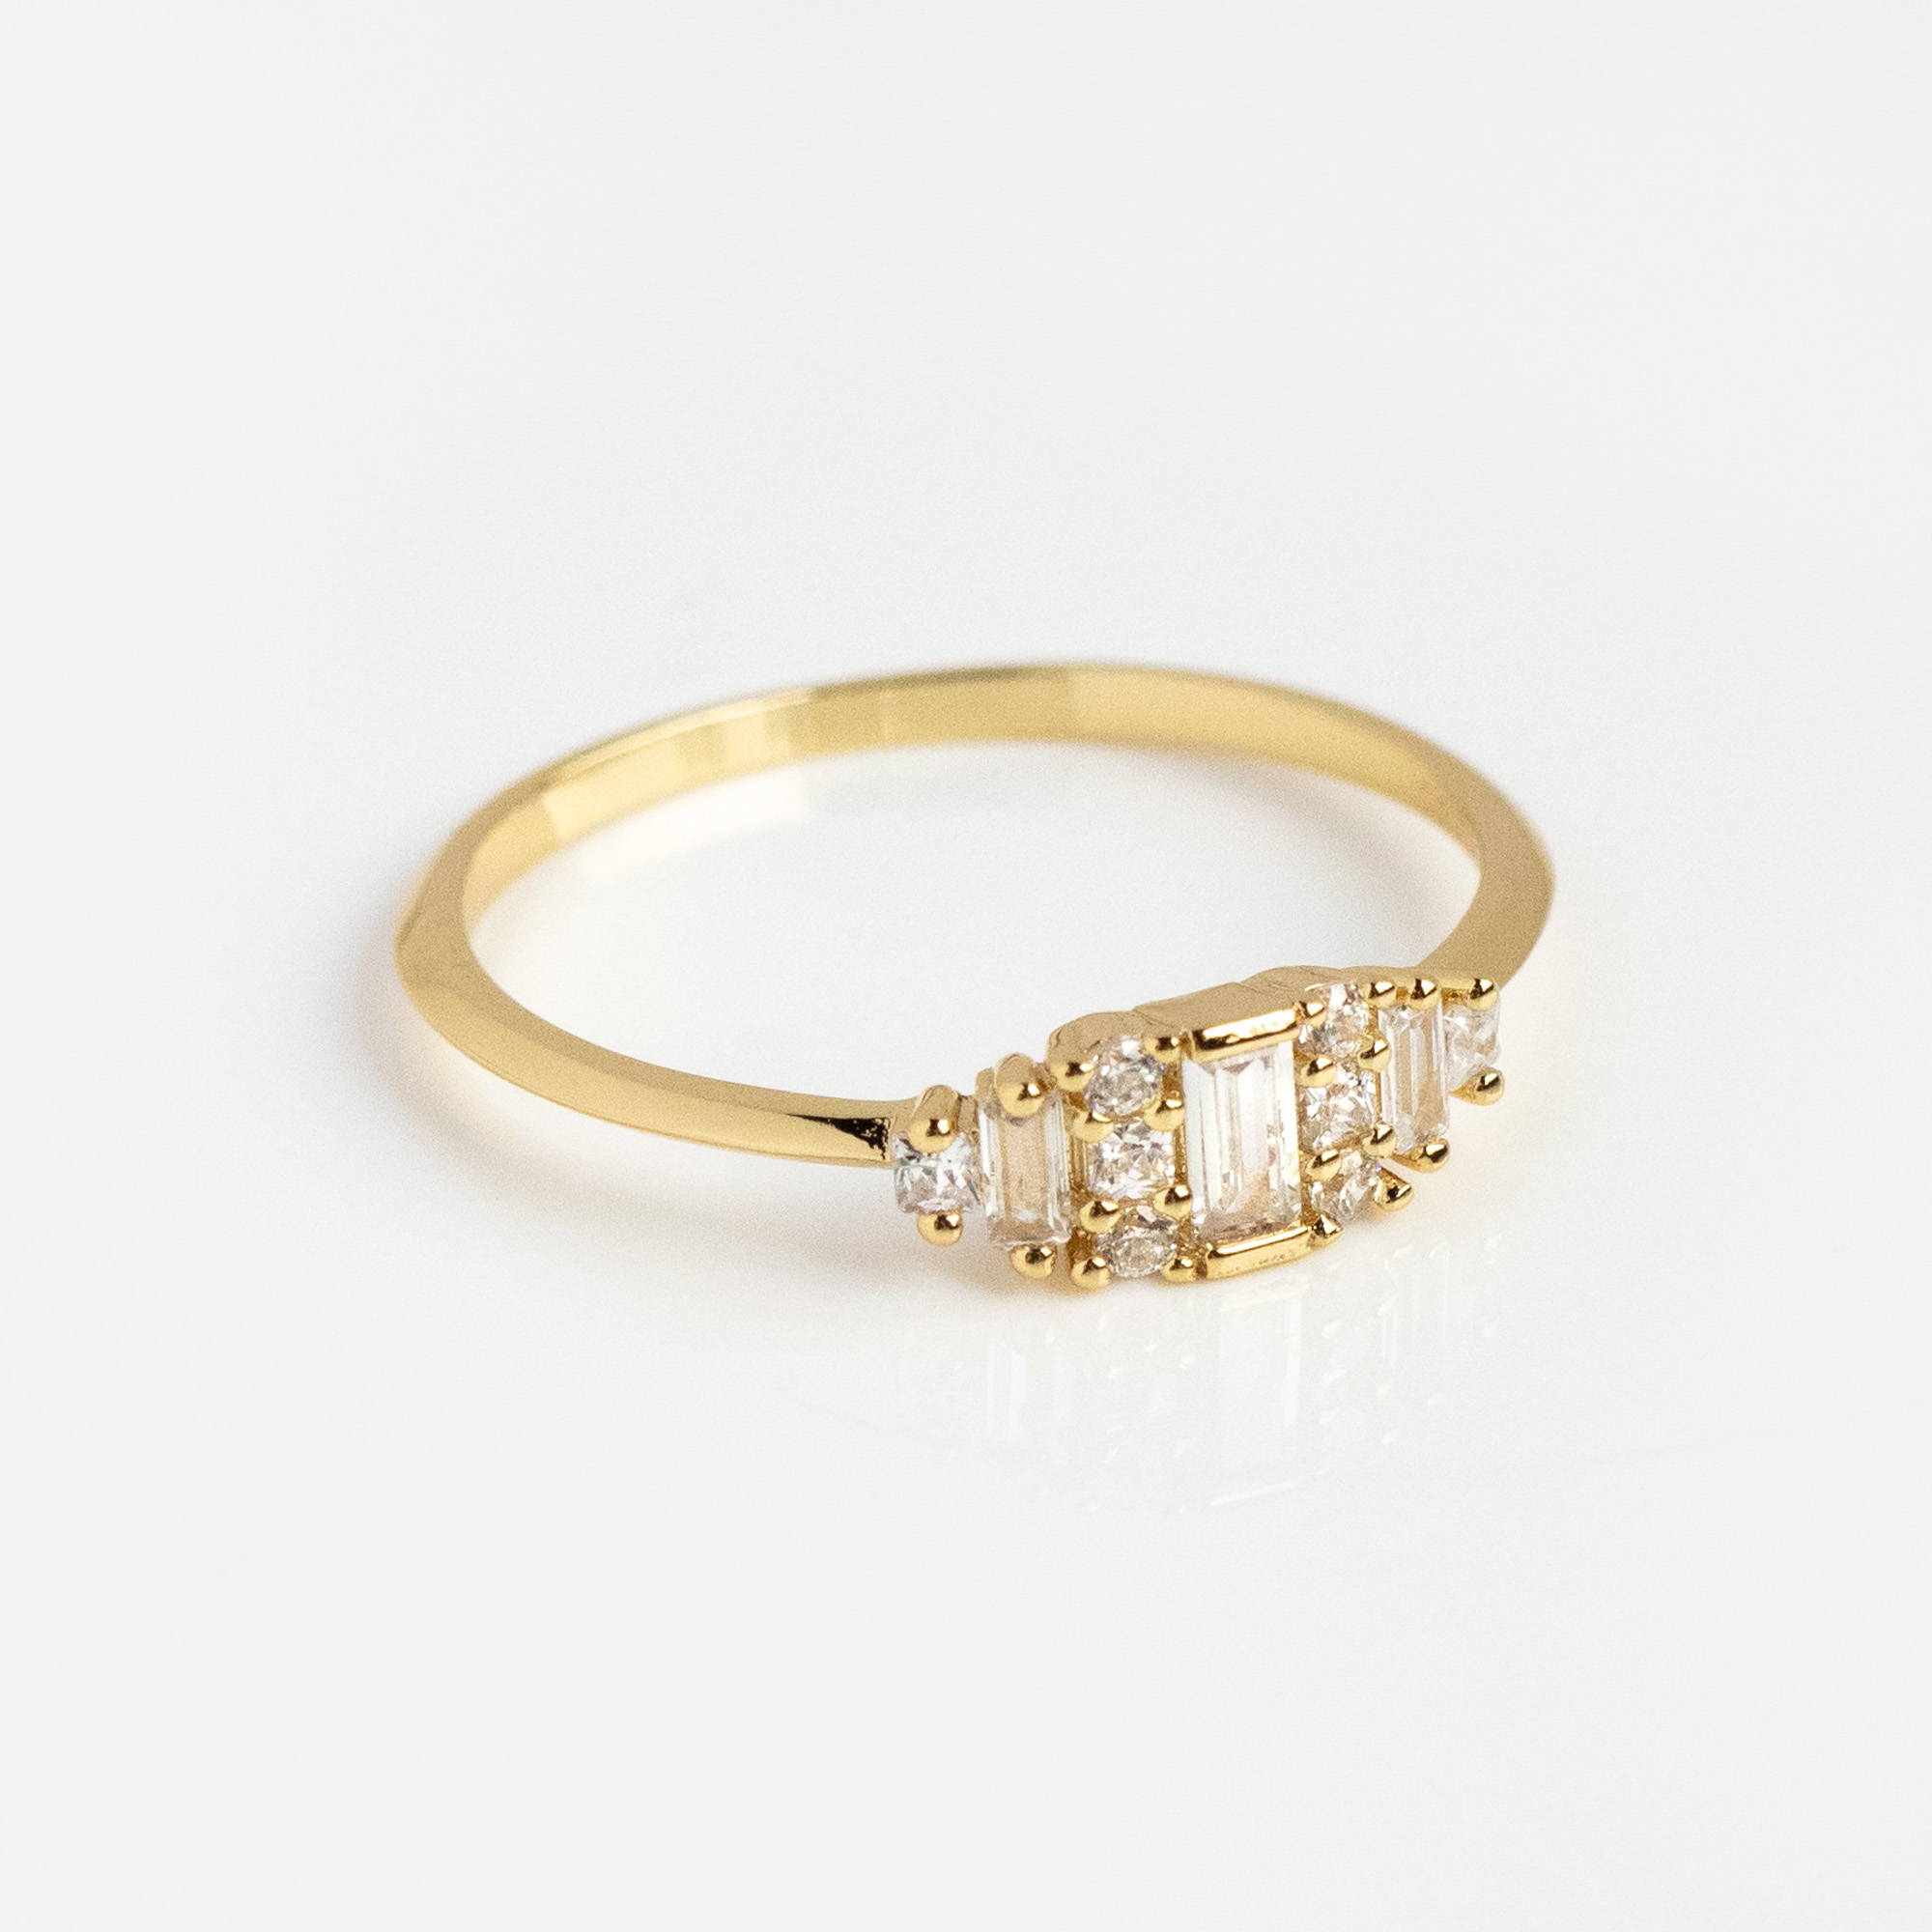 Summer Soiree Vintage Inspired Ring